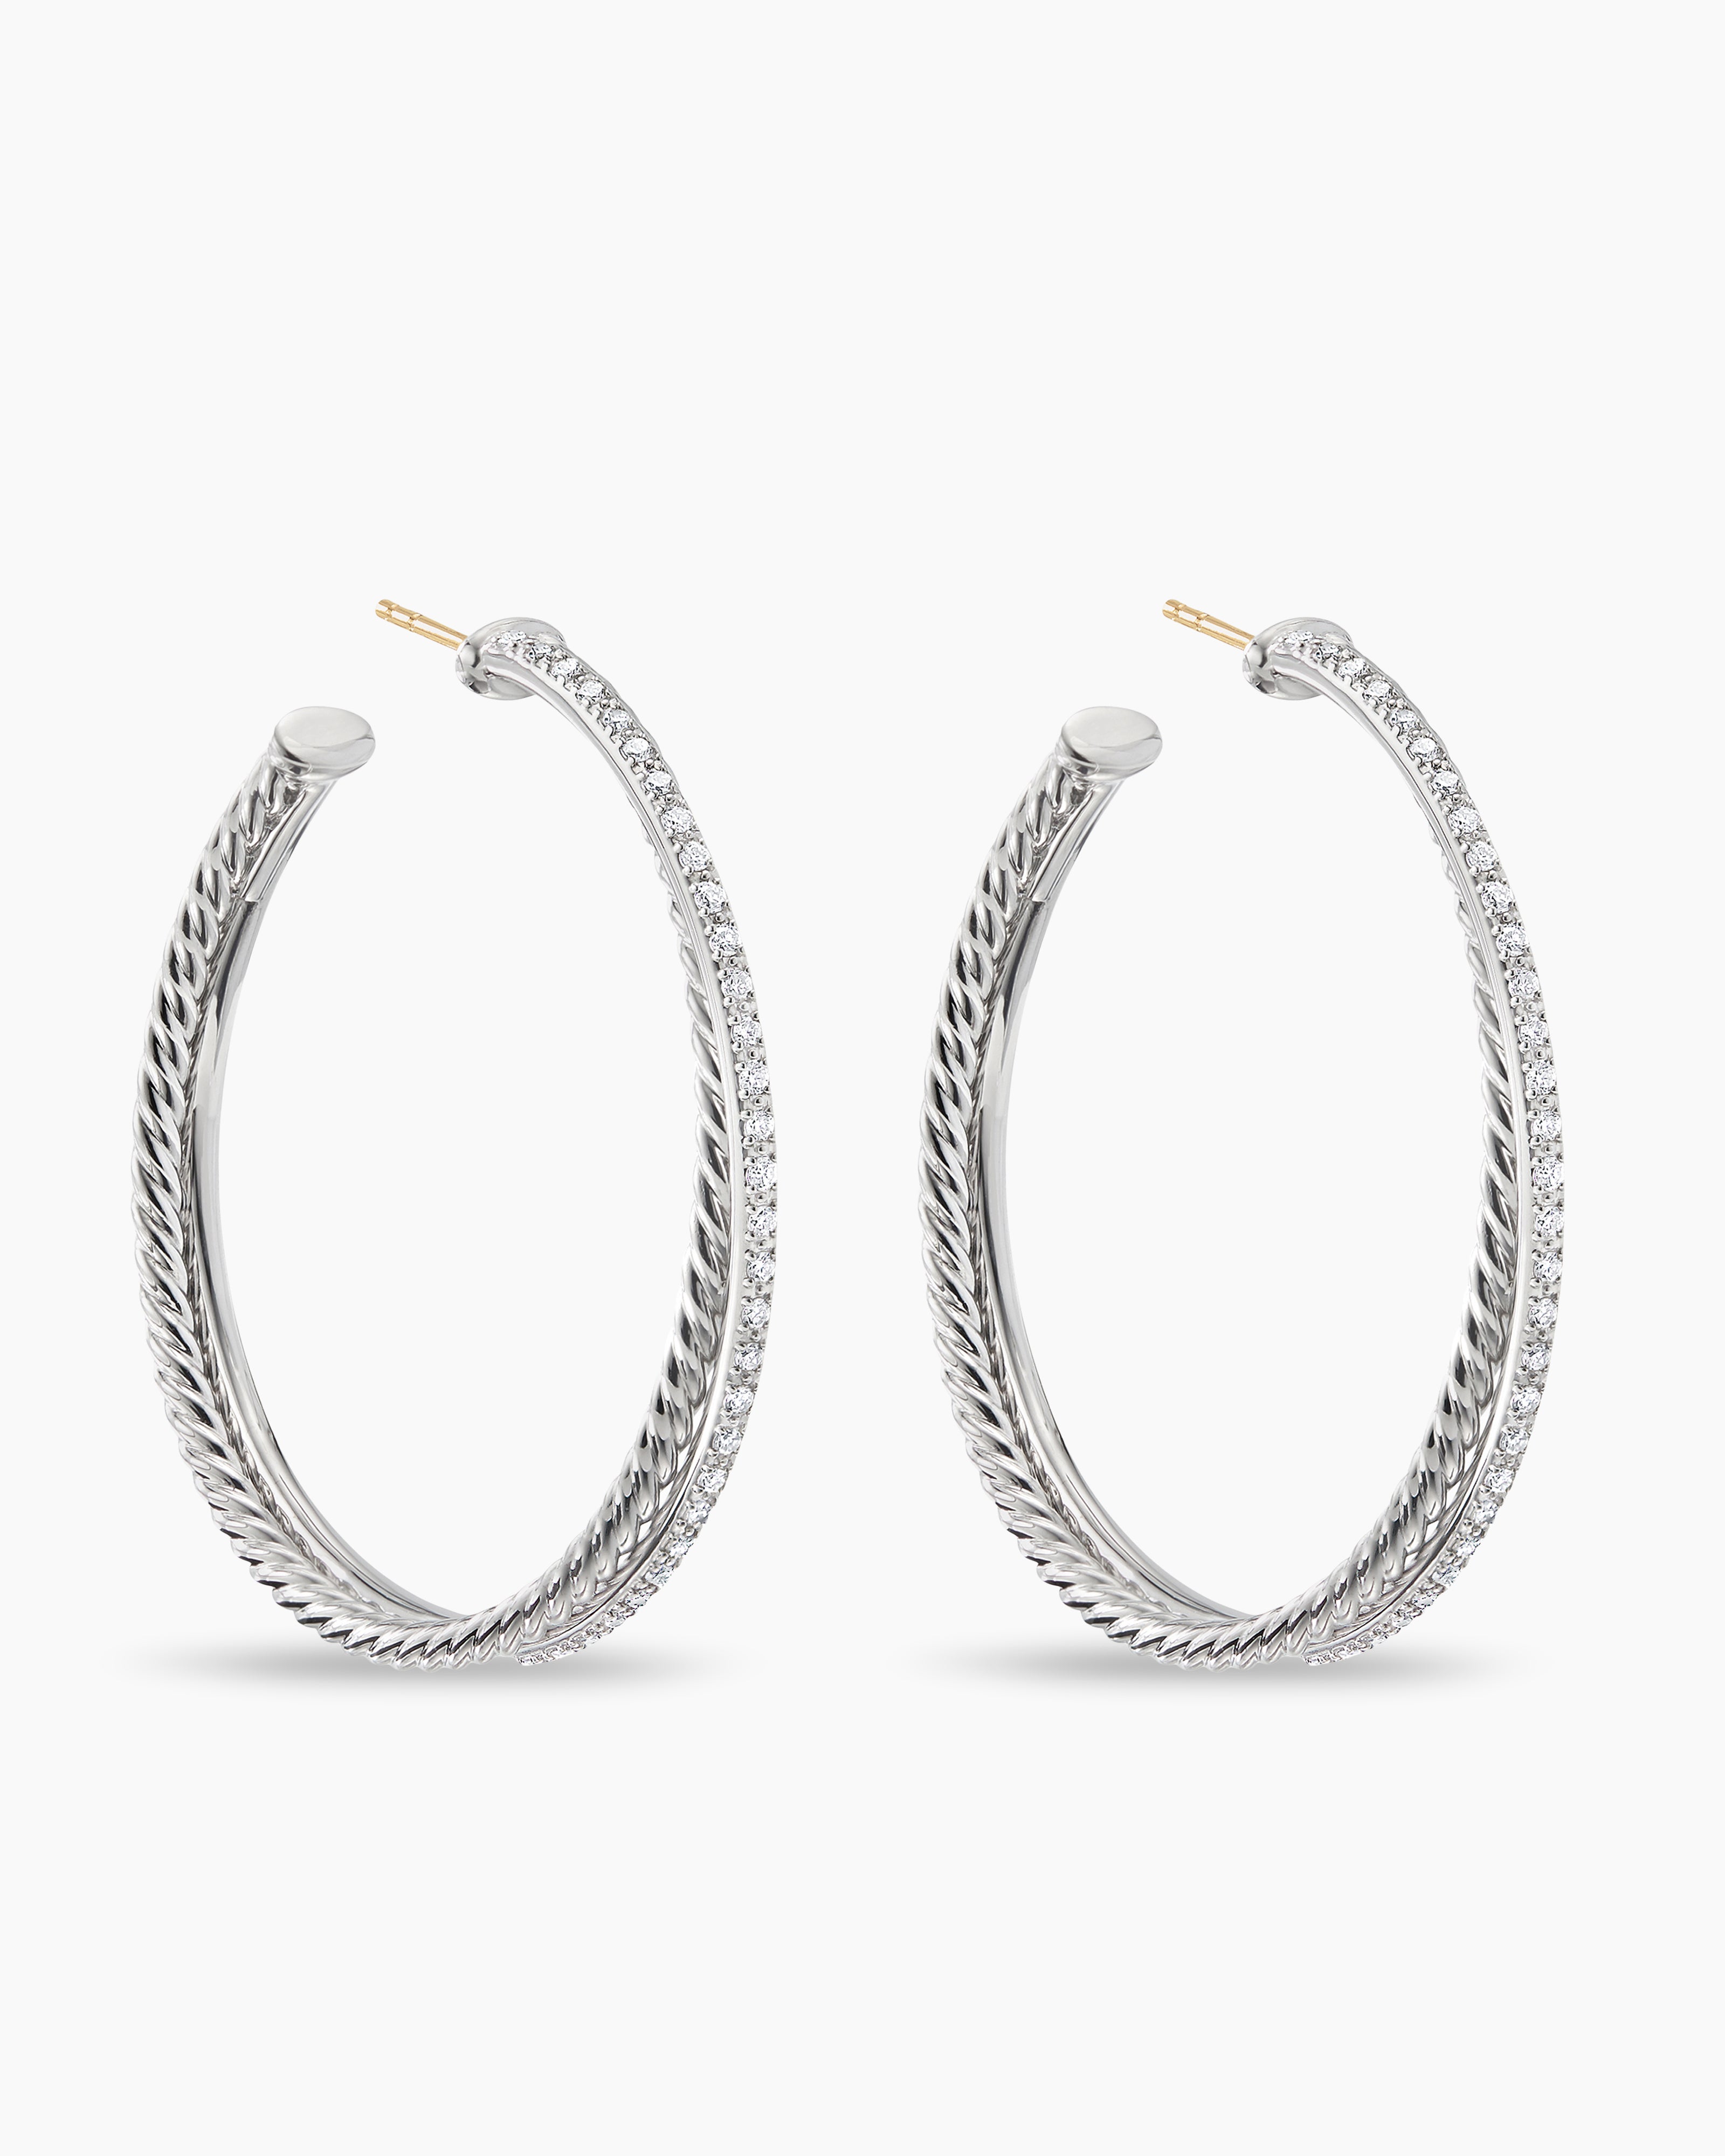 Crossover Hoop Earrings in Sterling Silver with Diamonds, 44mm